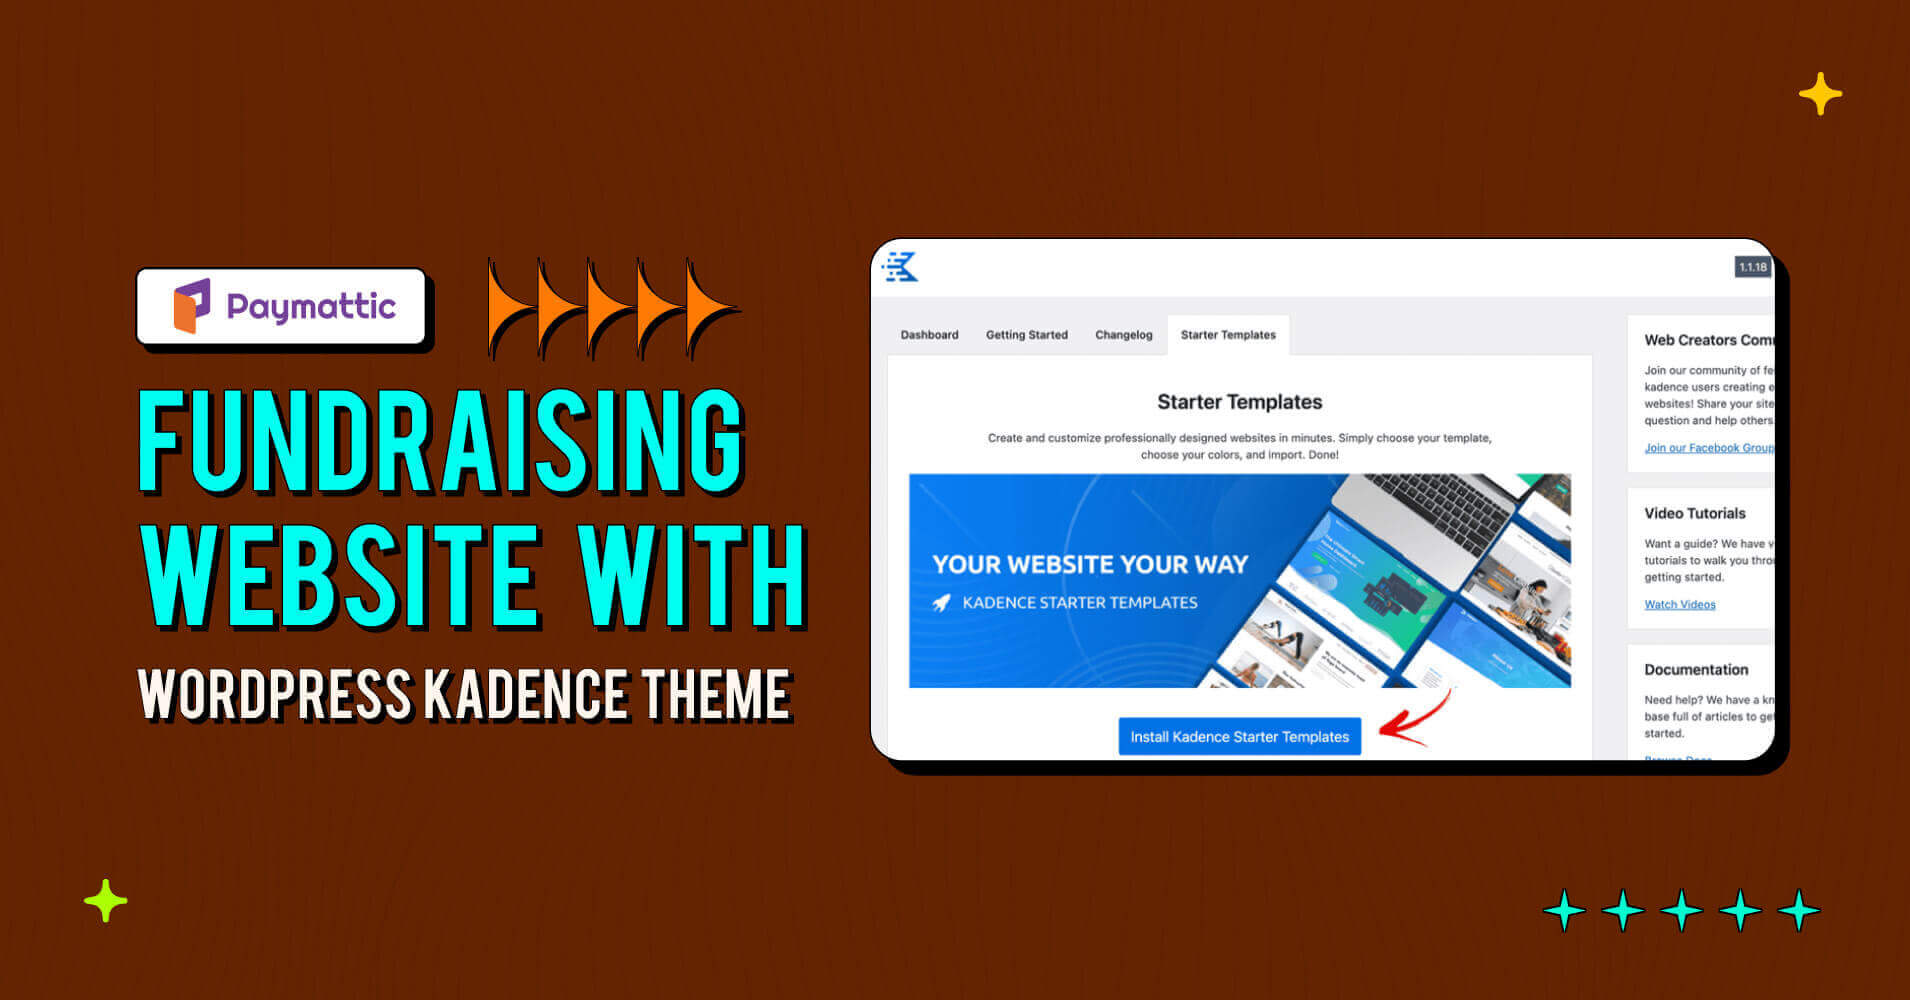 How to Create a Fundraising Website with WordPress Kadence Theme